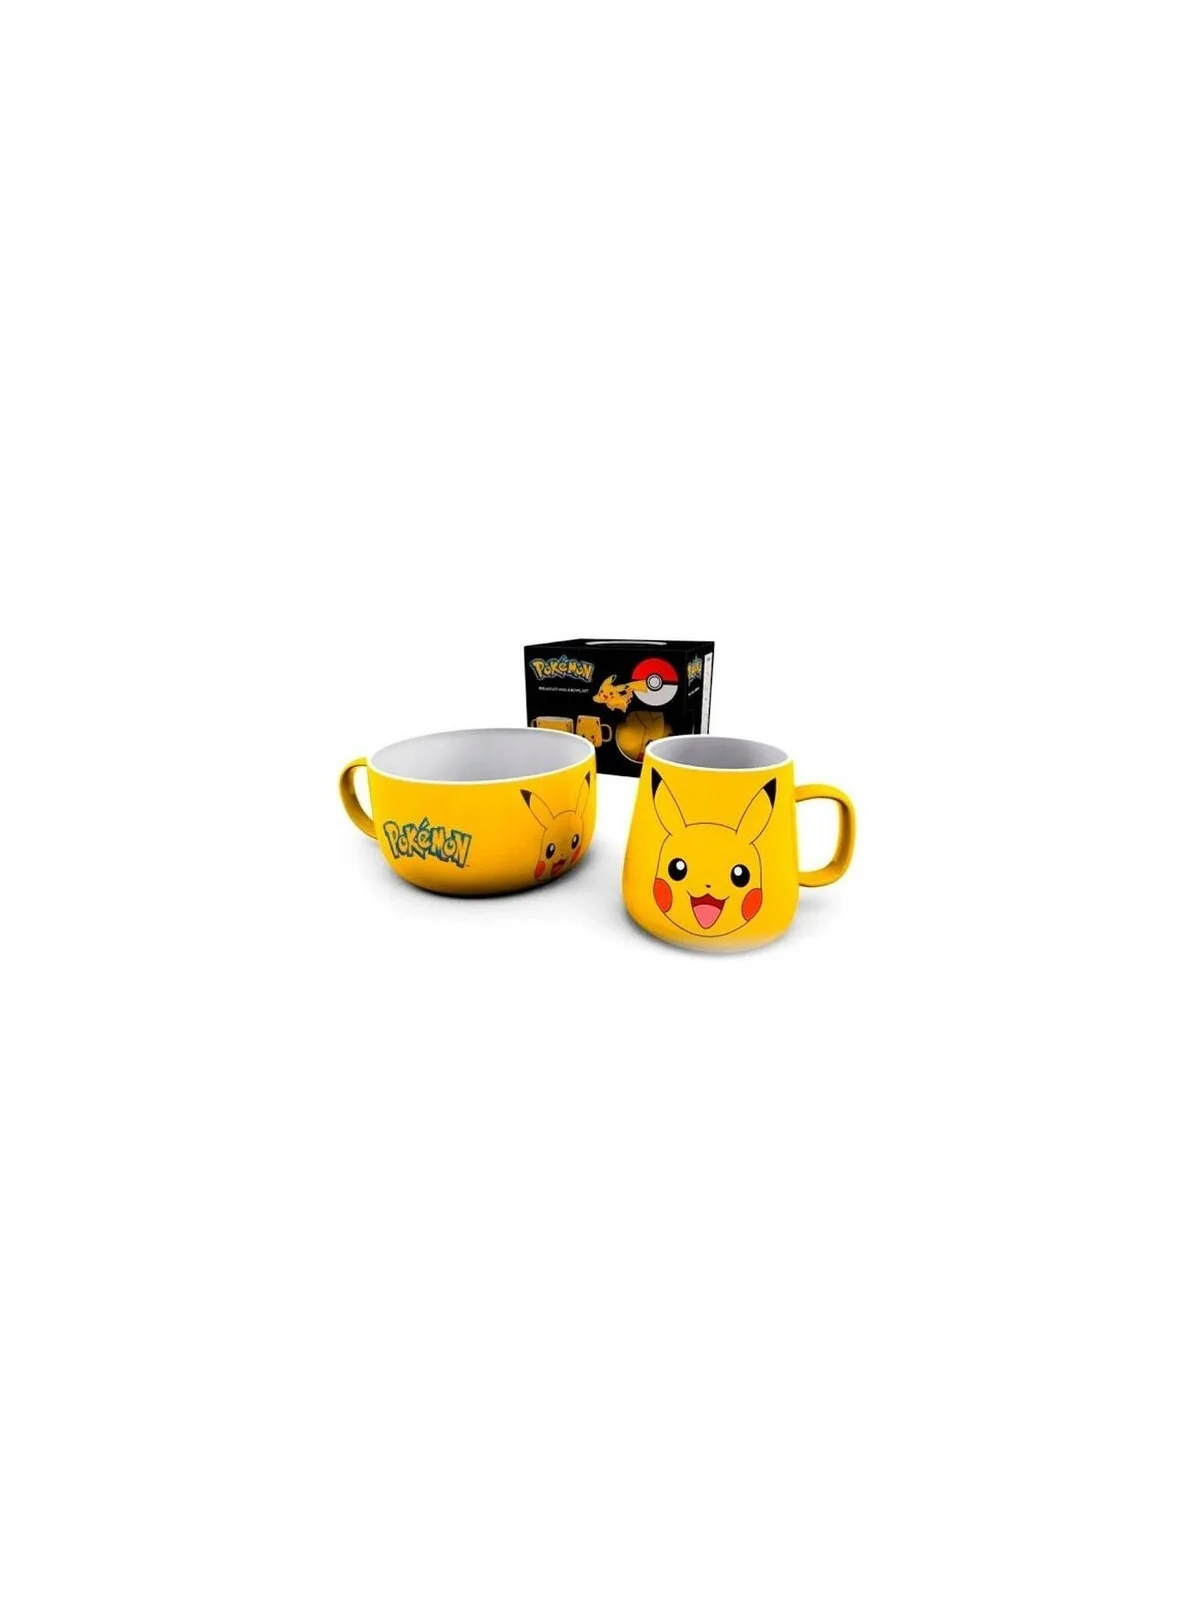 Comprar Set desayuno pokemon pikachu taza & barato al mejor precio 18,